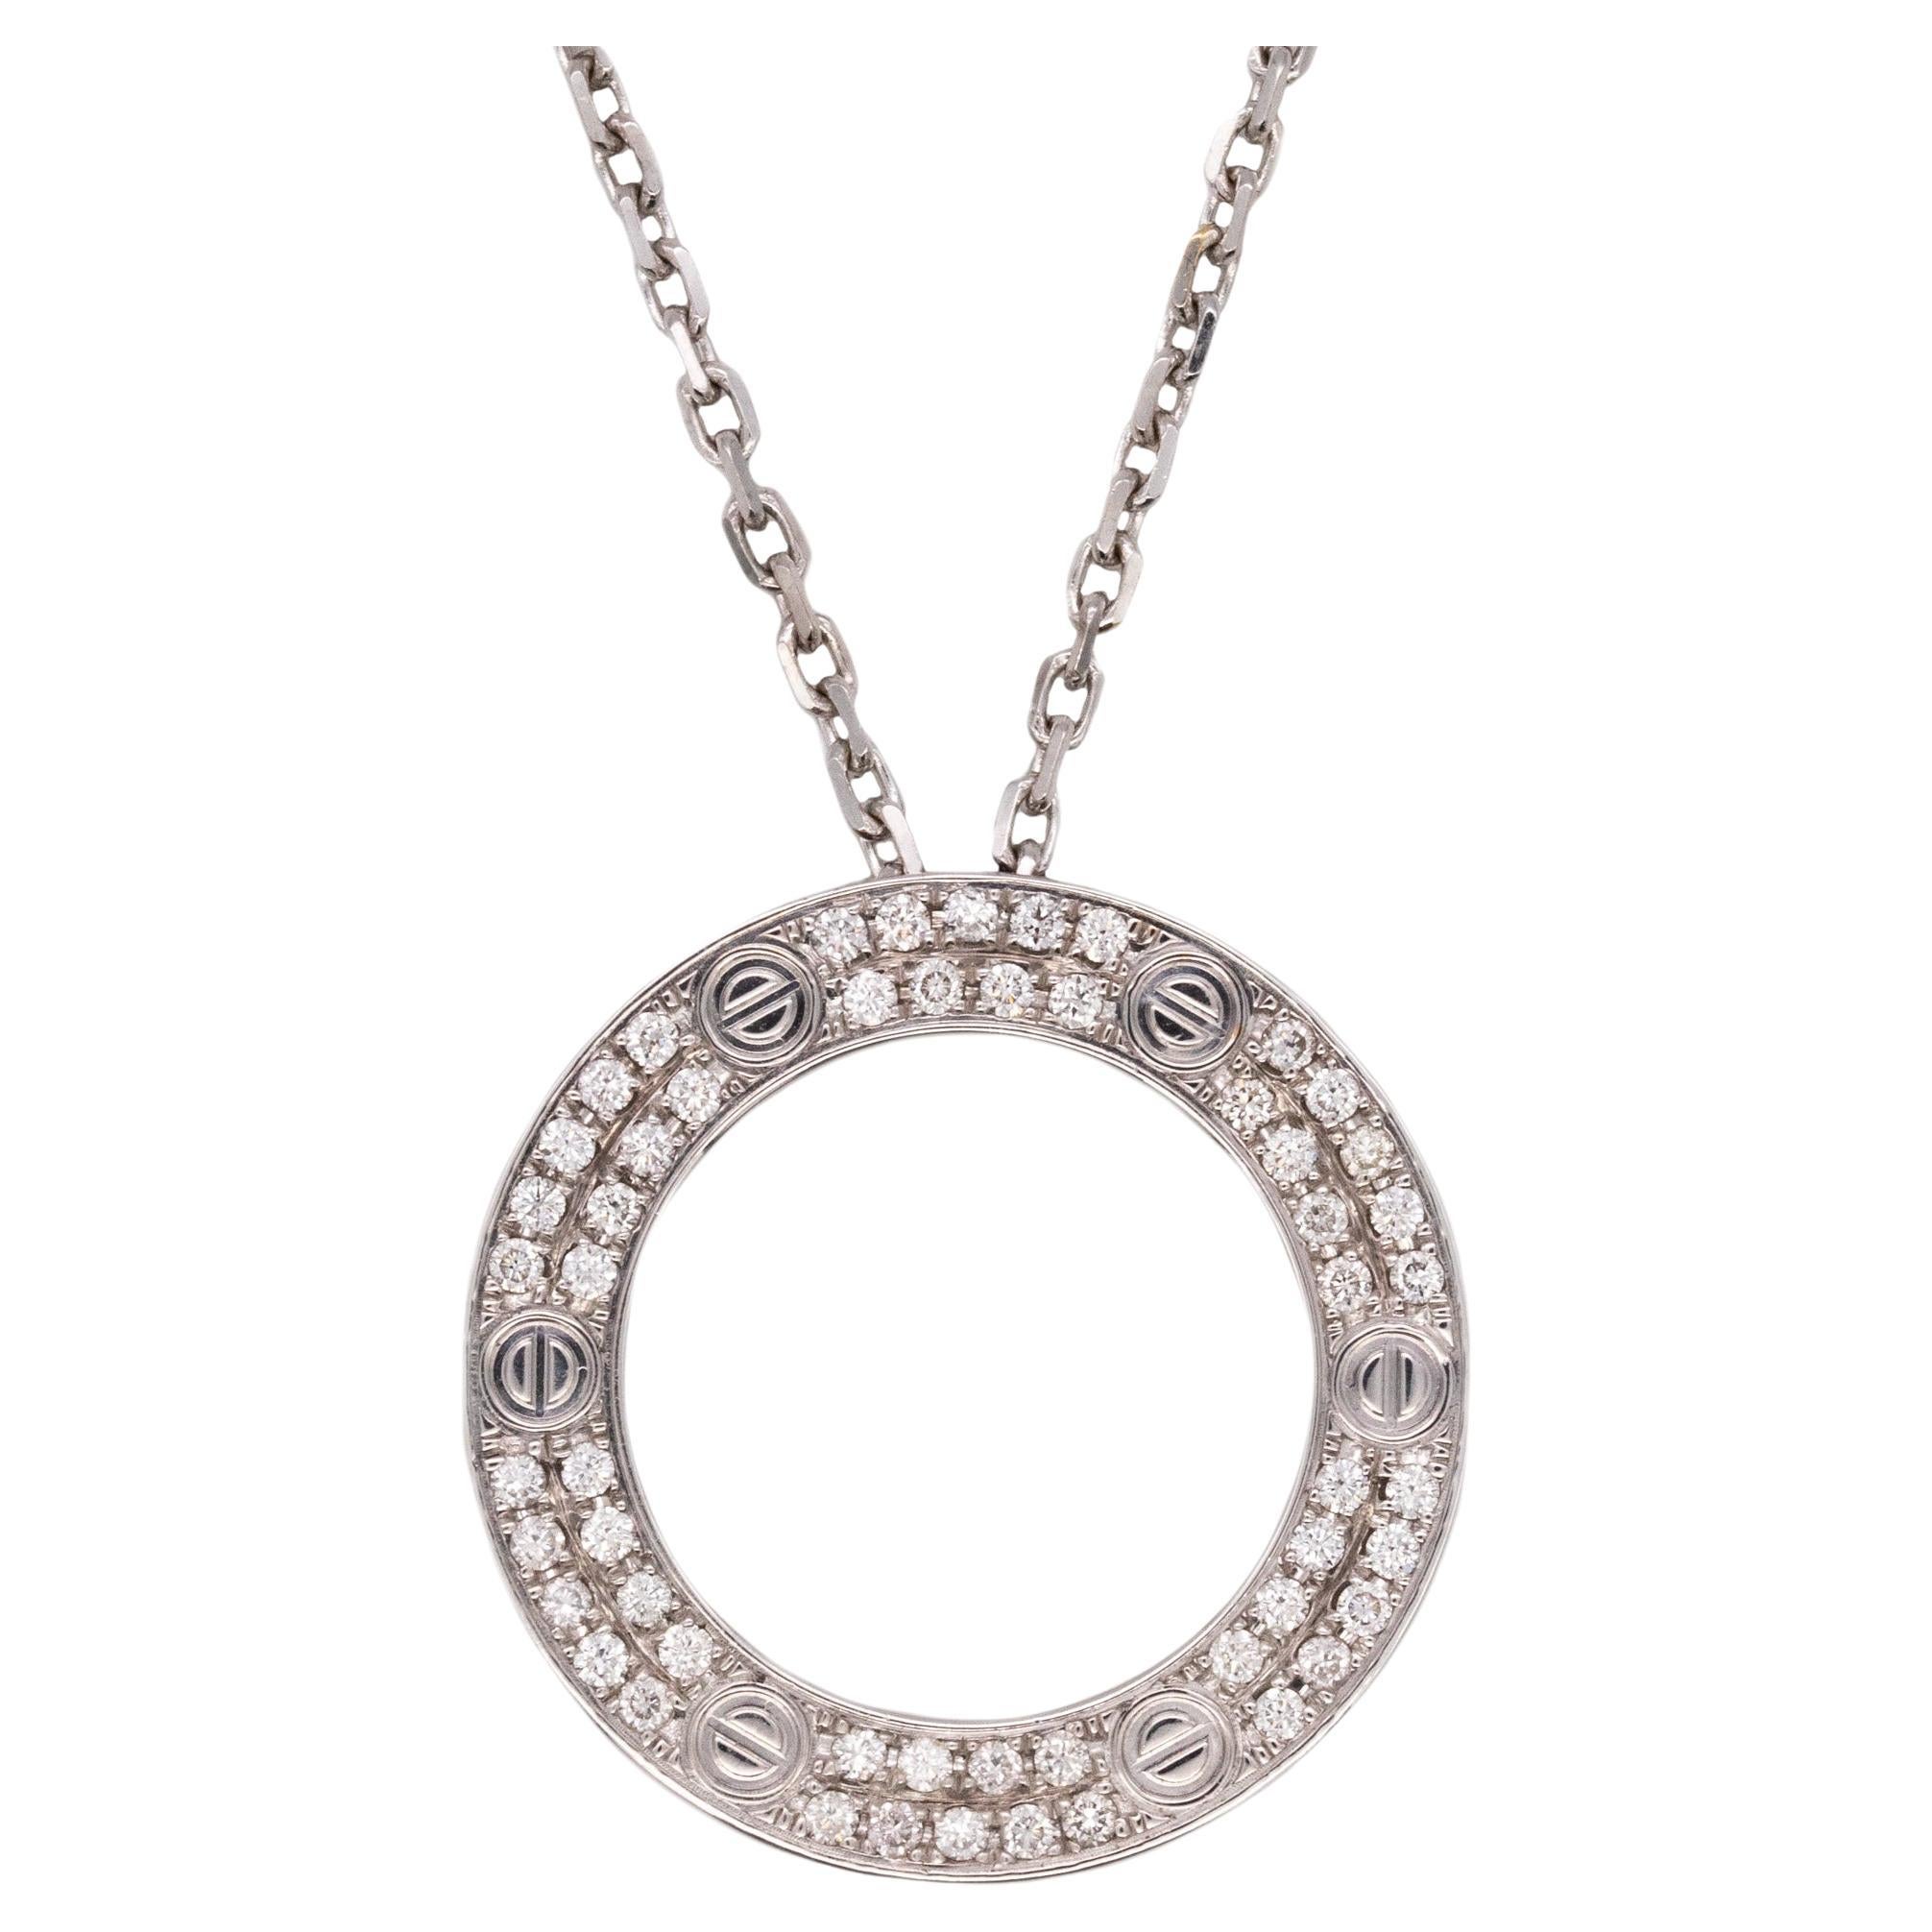 Cartier Paris Love Necklace Chain in 18Kt White Gold with 54 VVS Diamonds